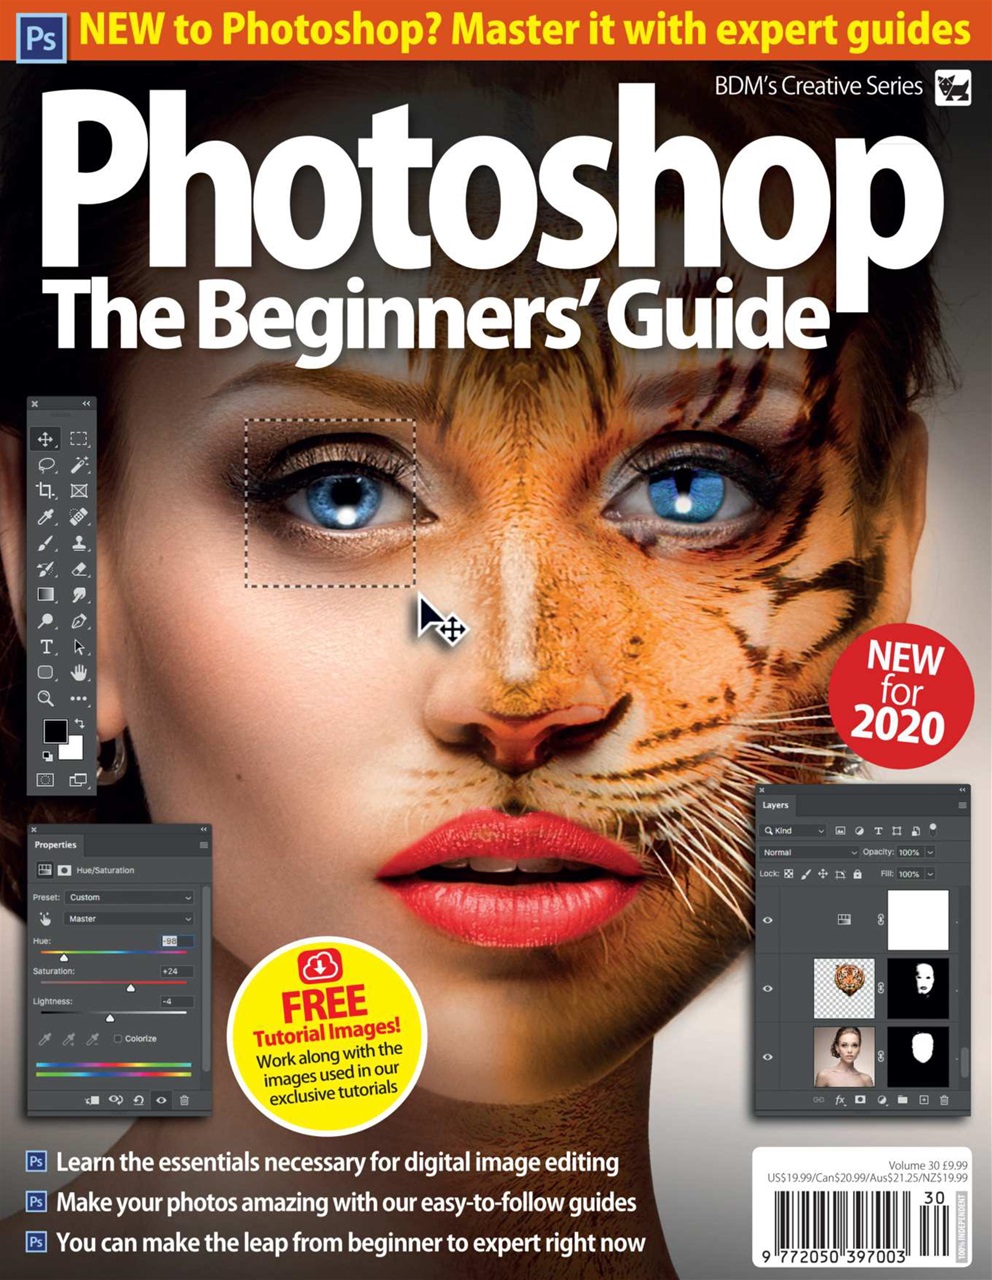 photoshop user magazine pdf free download